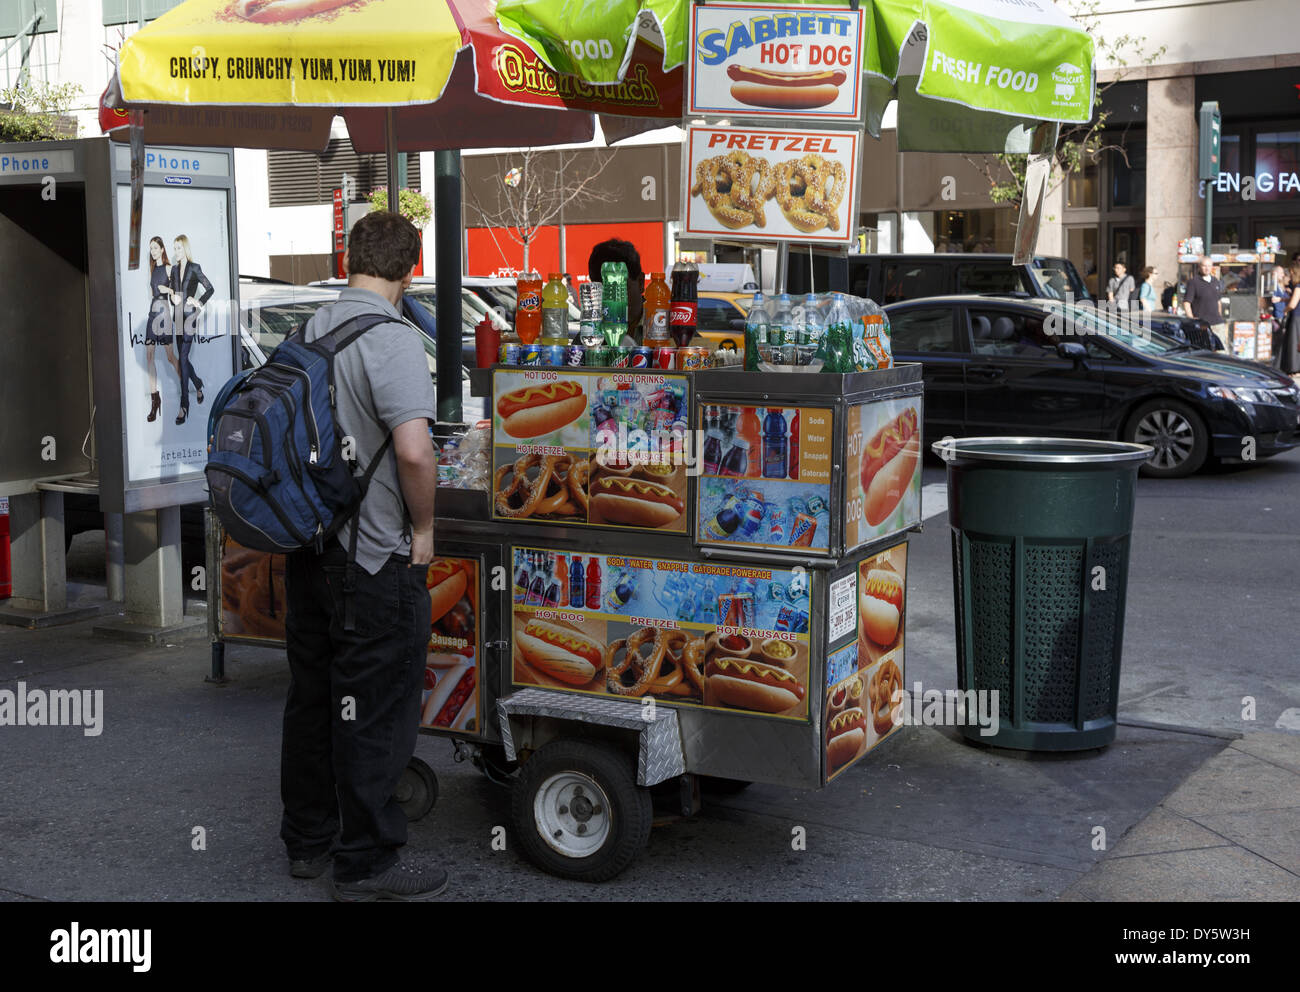 Food Street Vendor cart Manhattan New York City hot dog Stock Photo